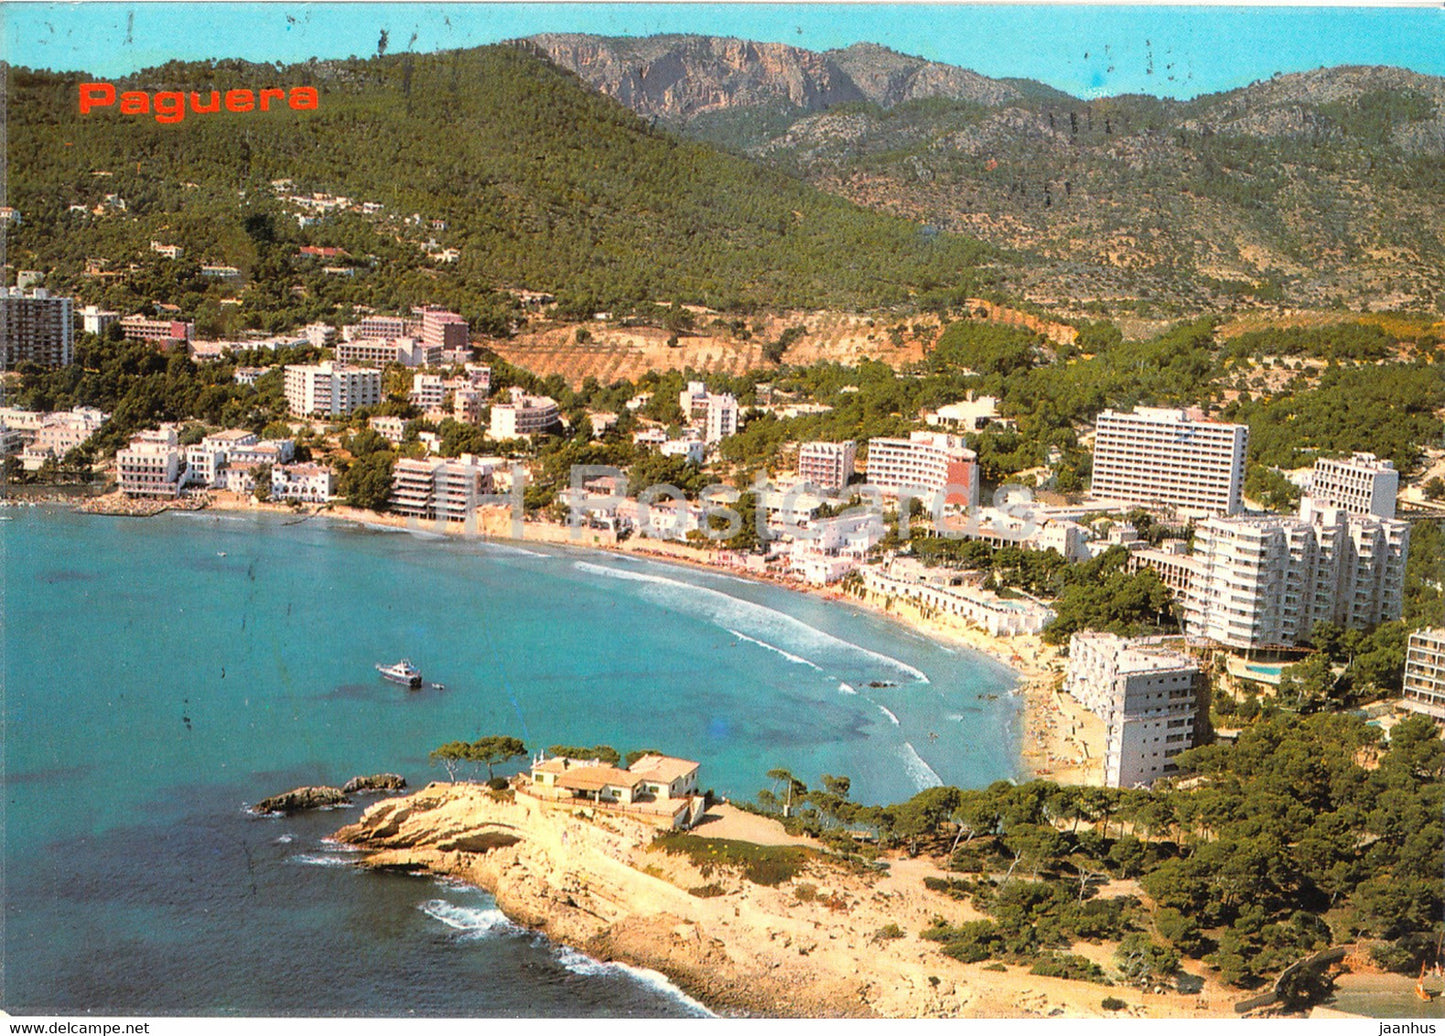 Paguera - Mallorca - 1974 - Spain - used - JH Postcards